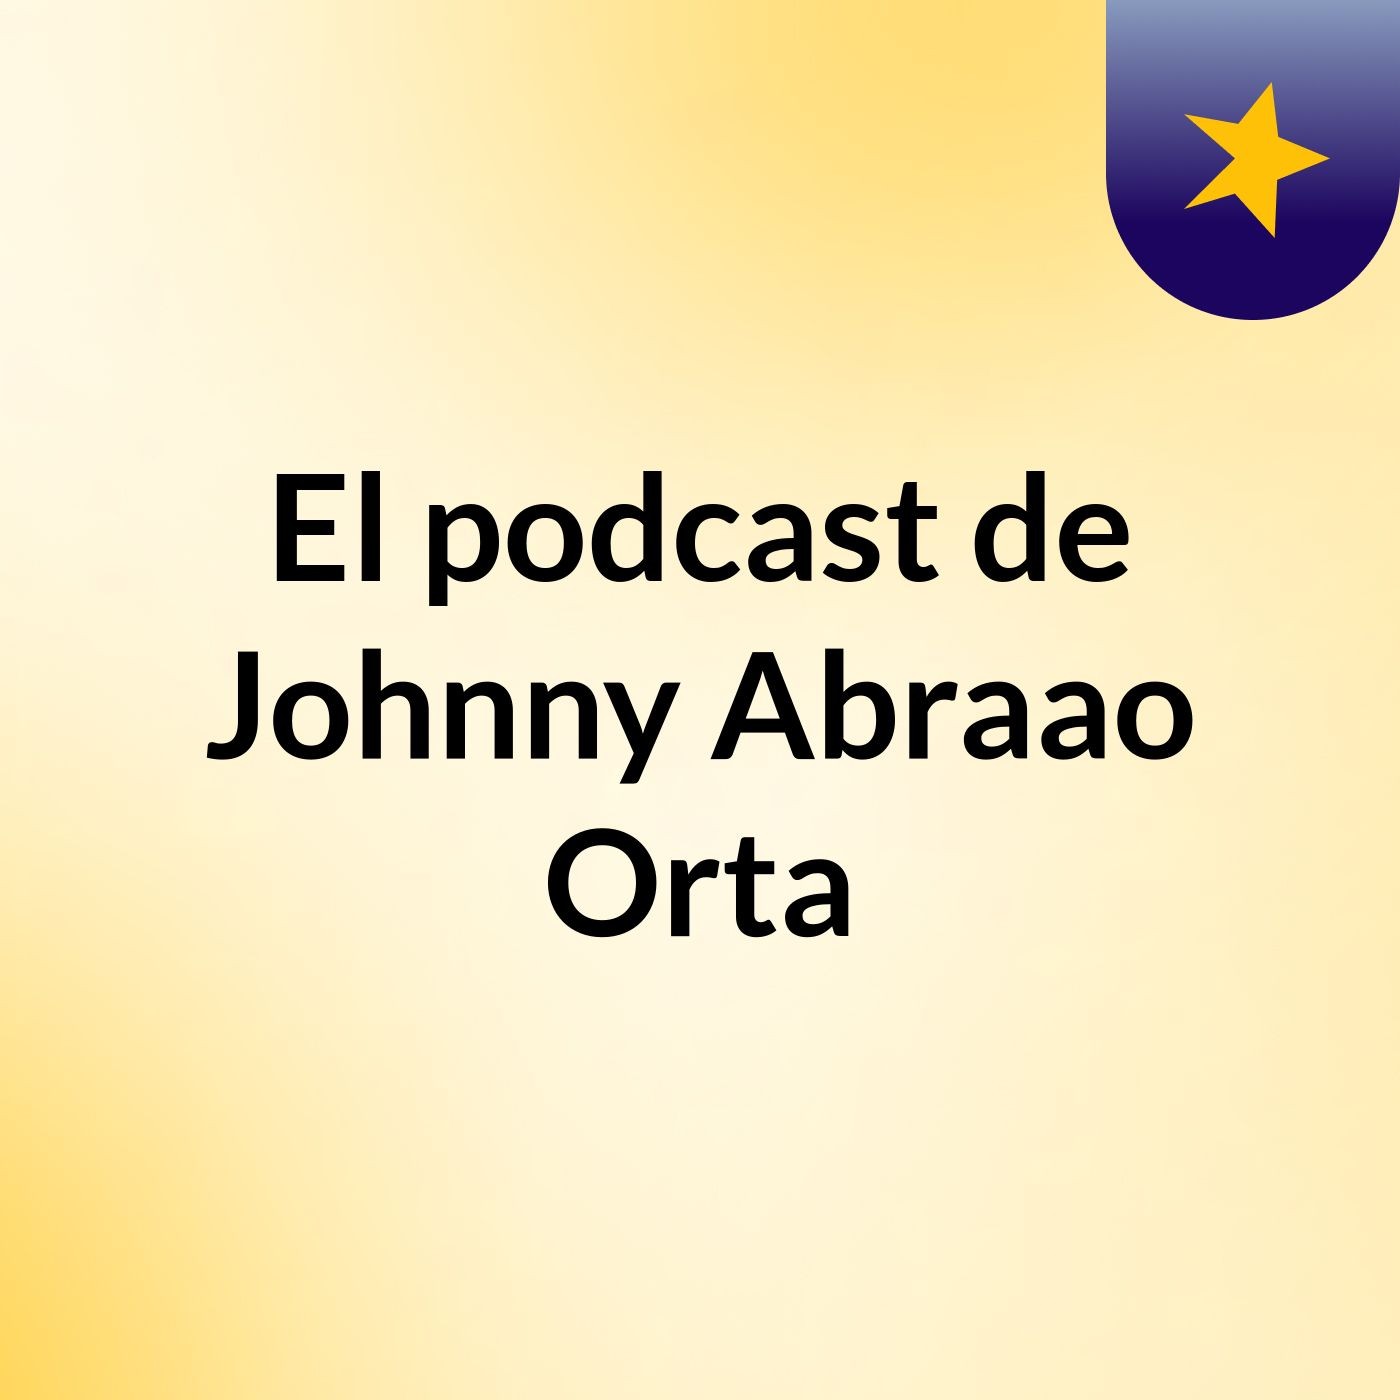 El podcast de Johnny Abraao Orta